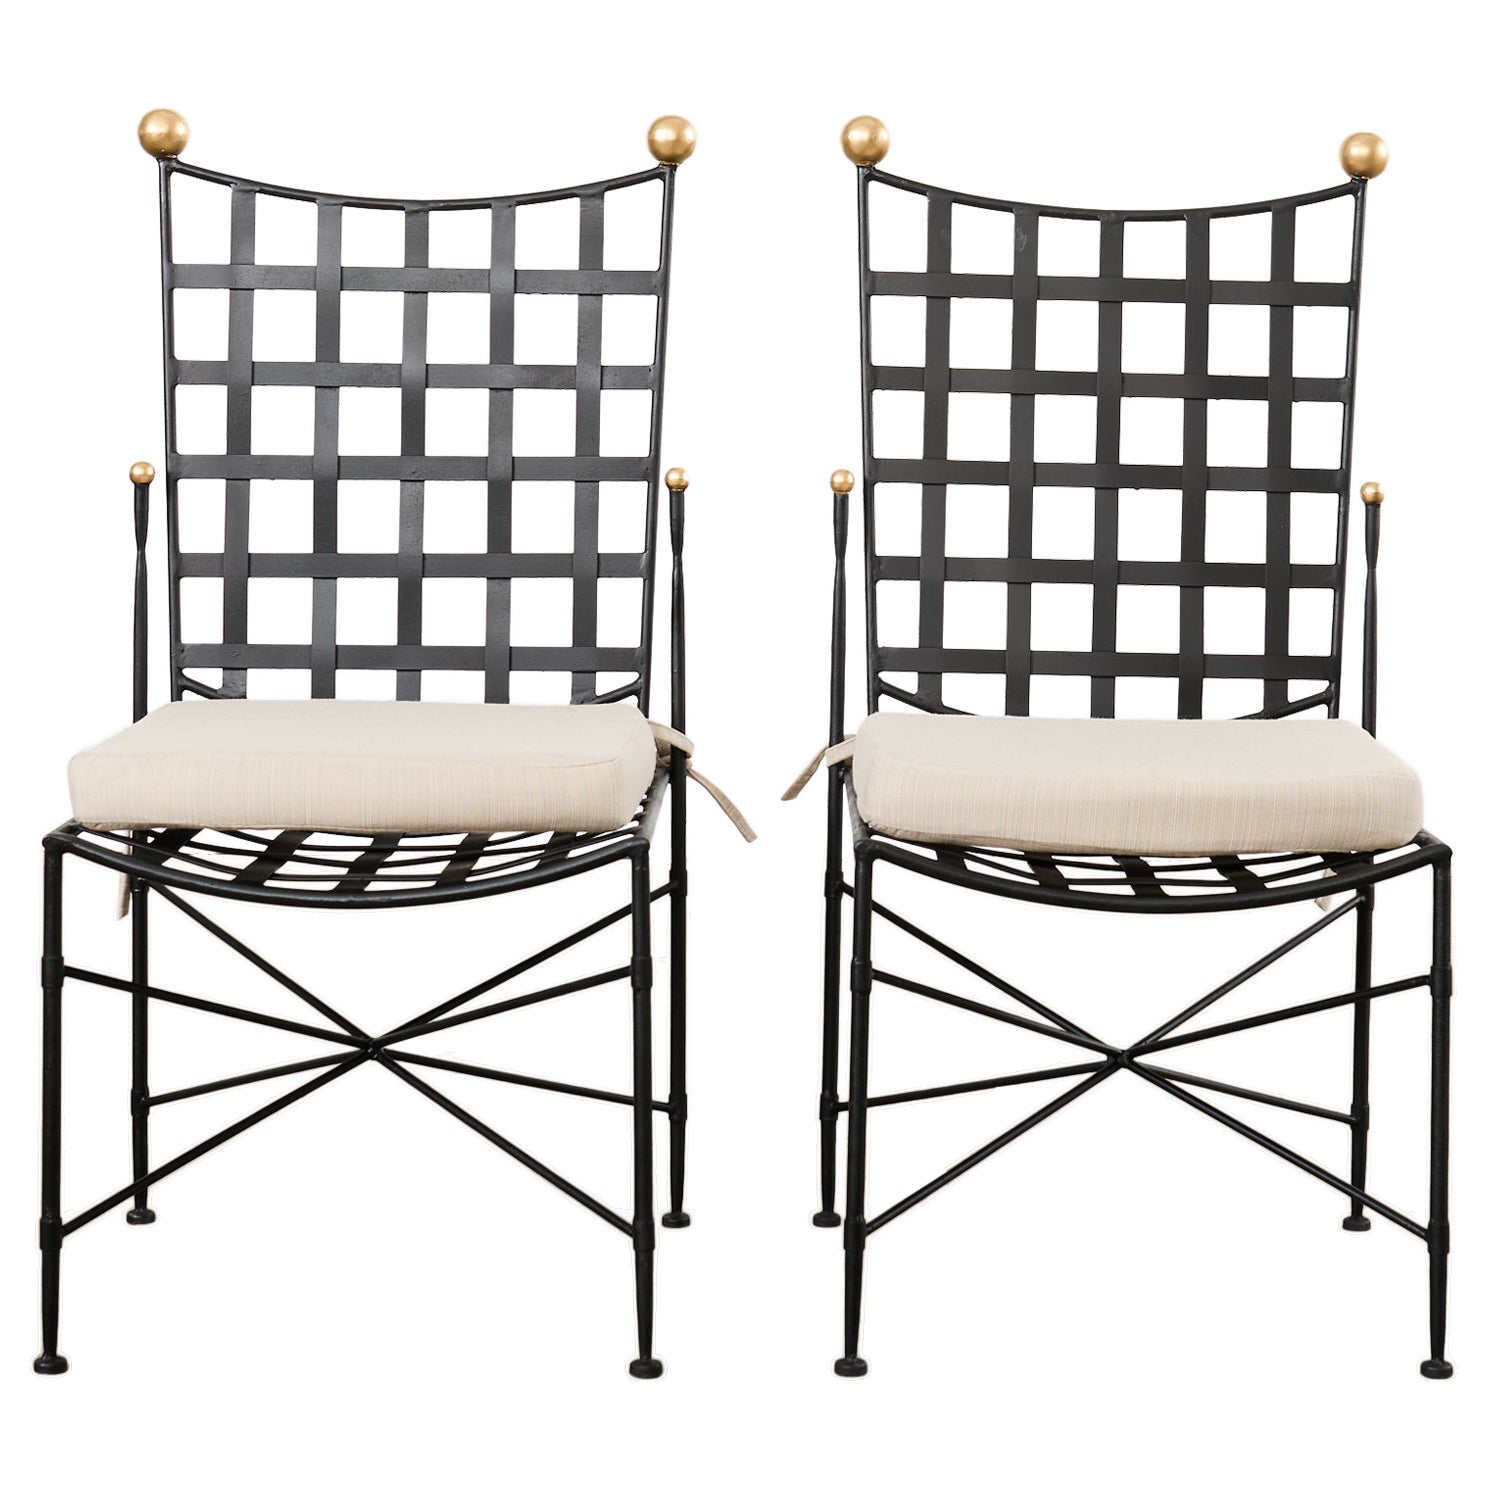 Pair of Mario Papperzini for John Salterini Garden Dining Chairs